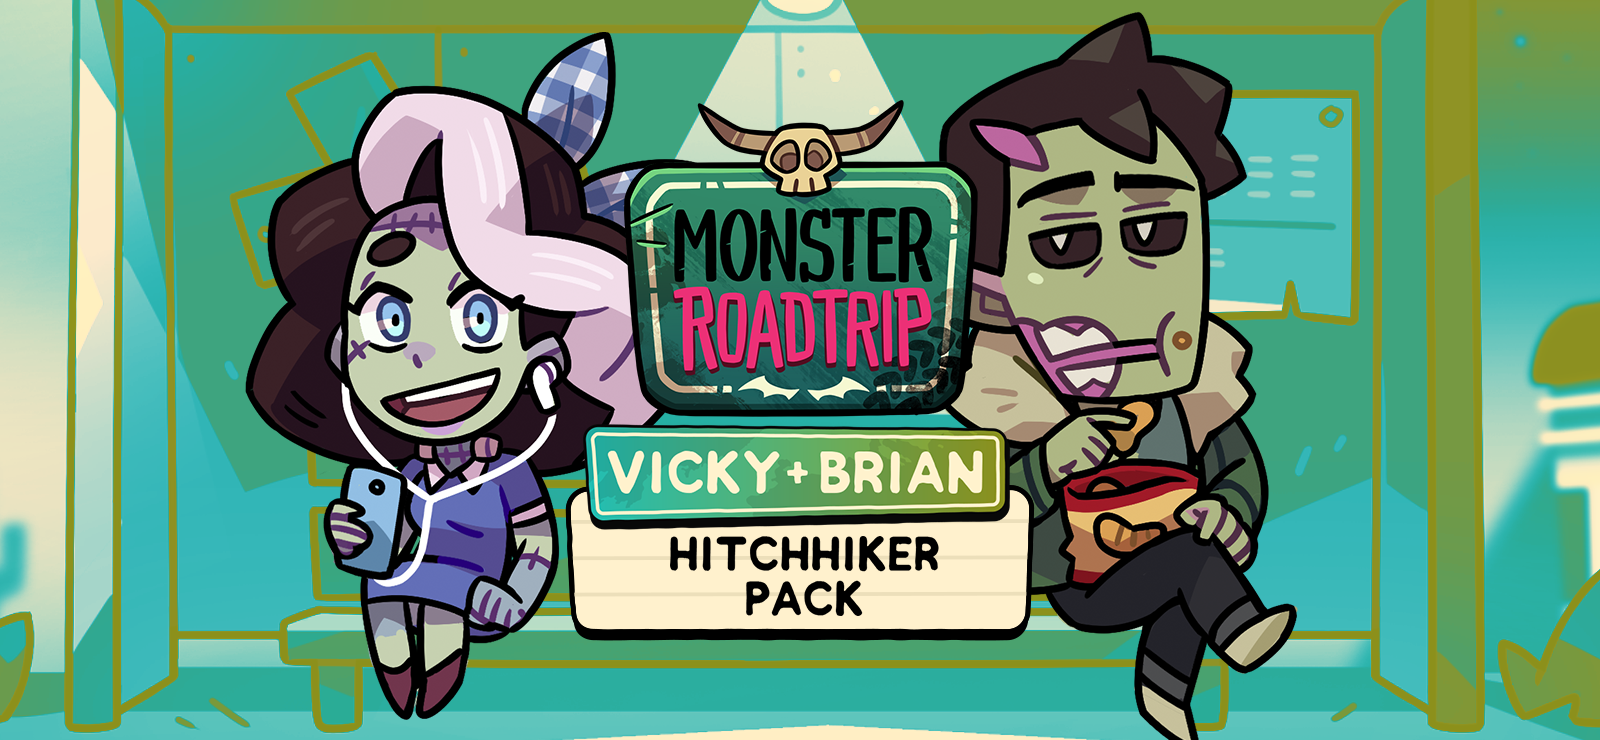 Monster Roadtrip - Hitchhiker Pack - Vicky & Brian